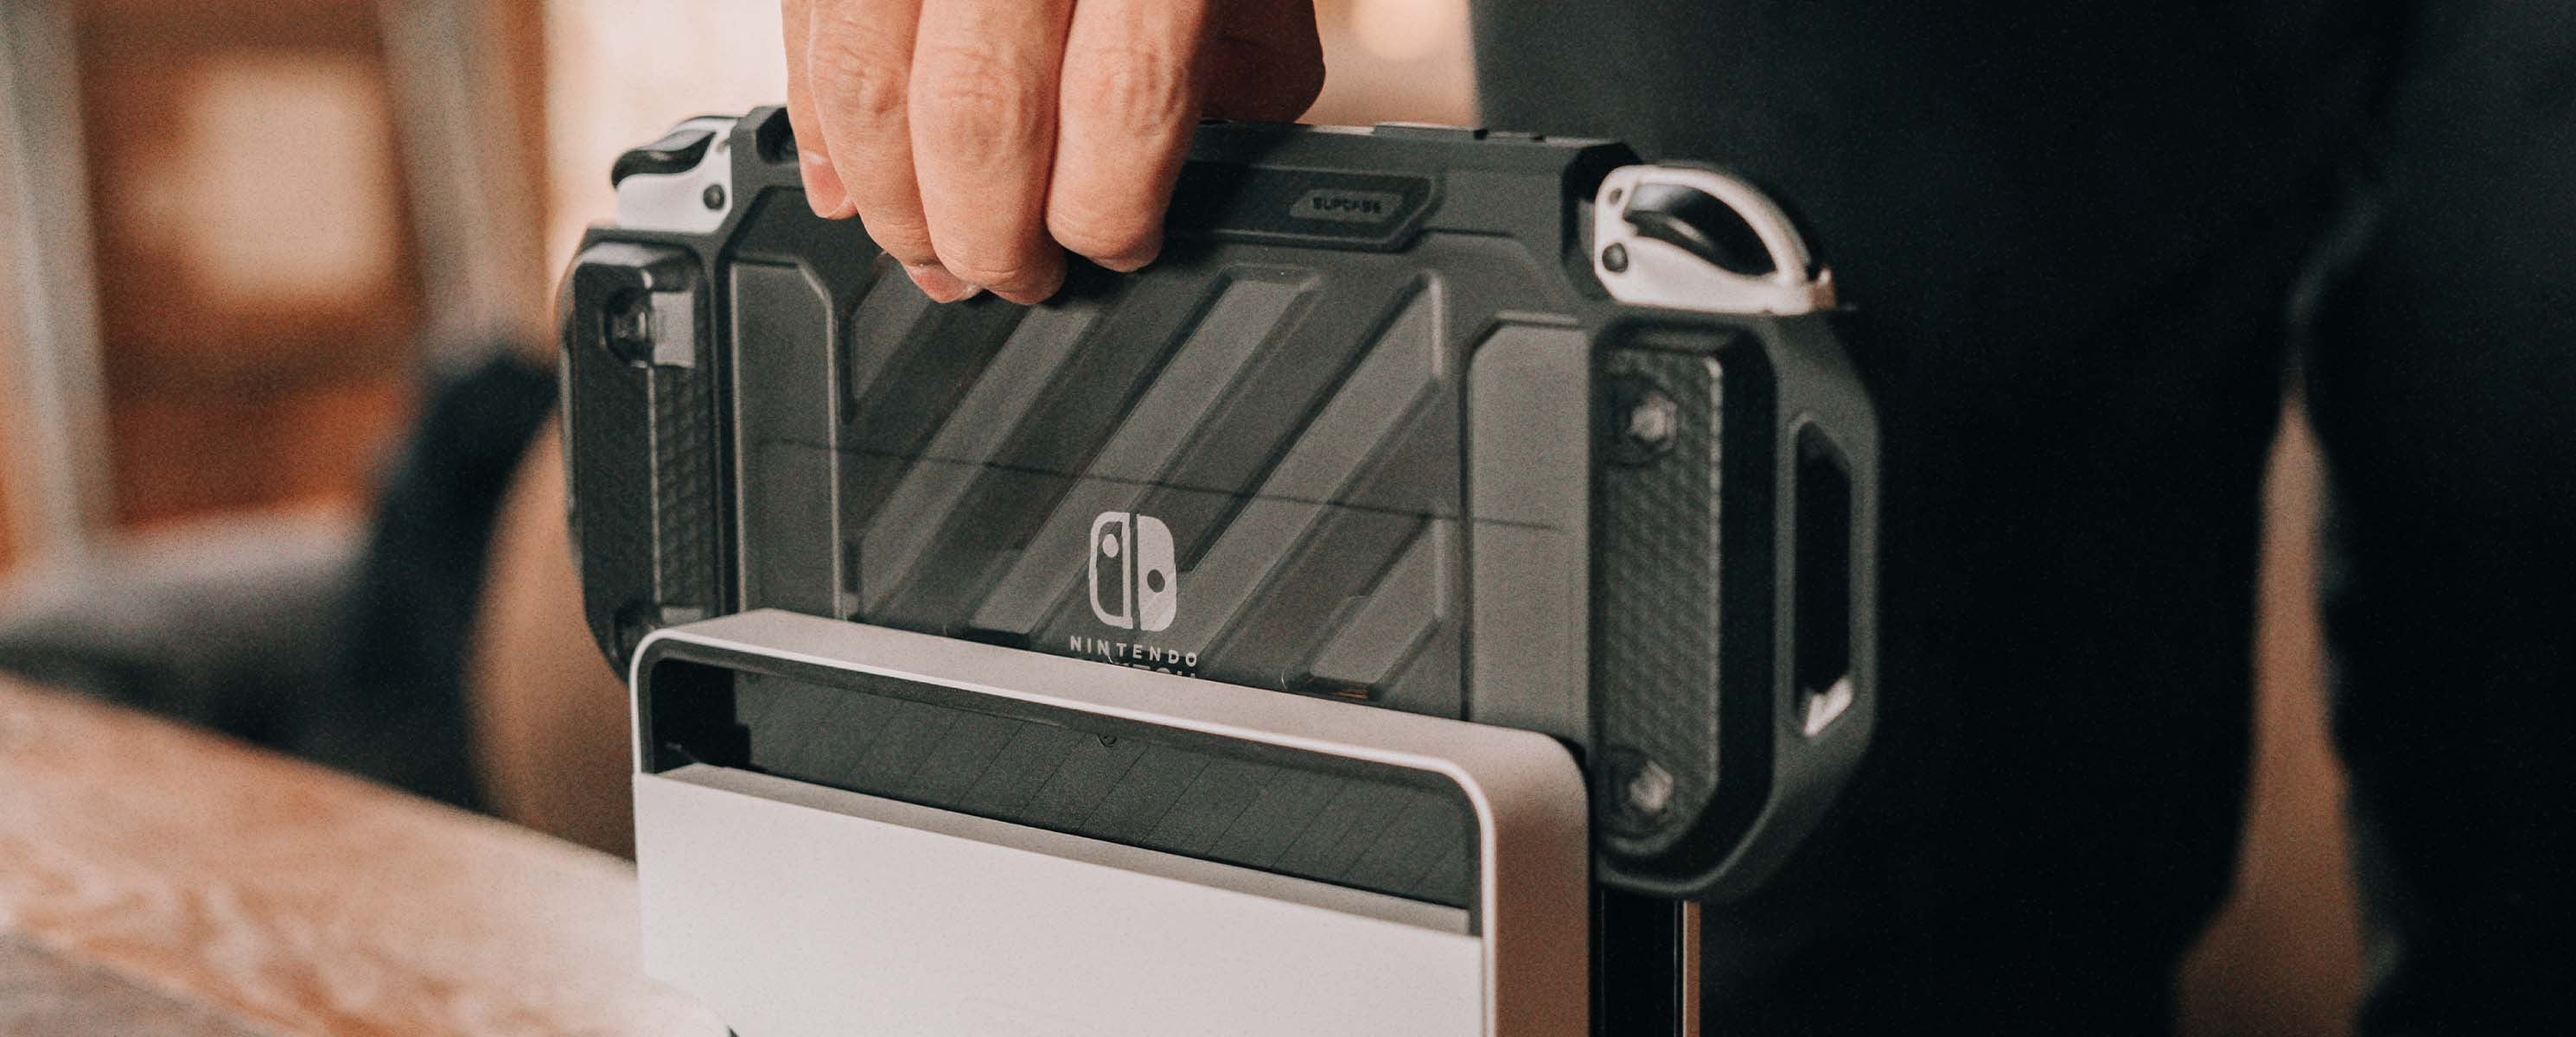 Nintendo Switch OLED Cases